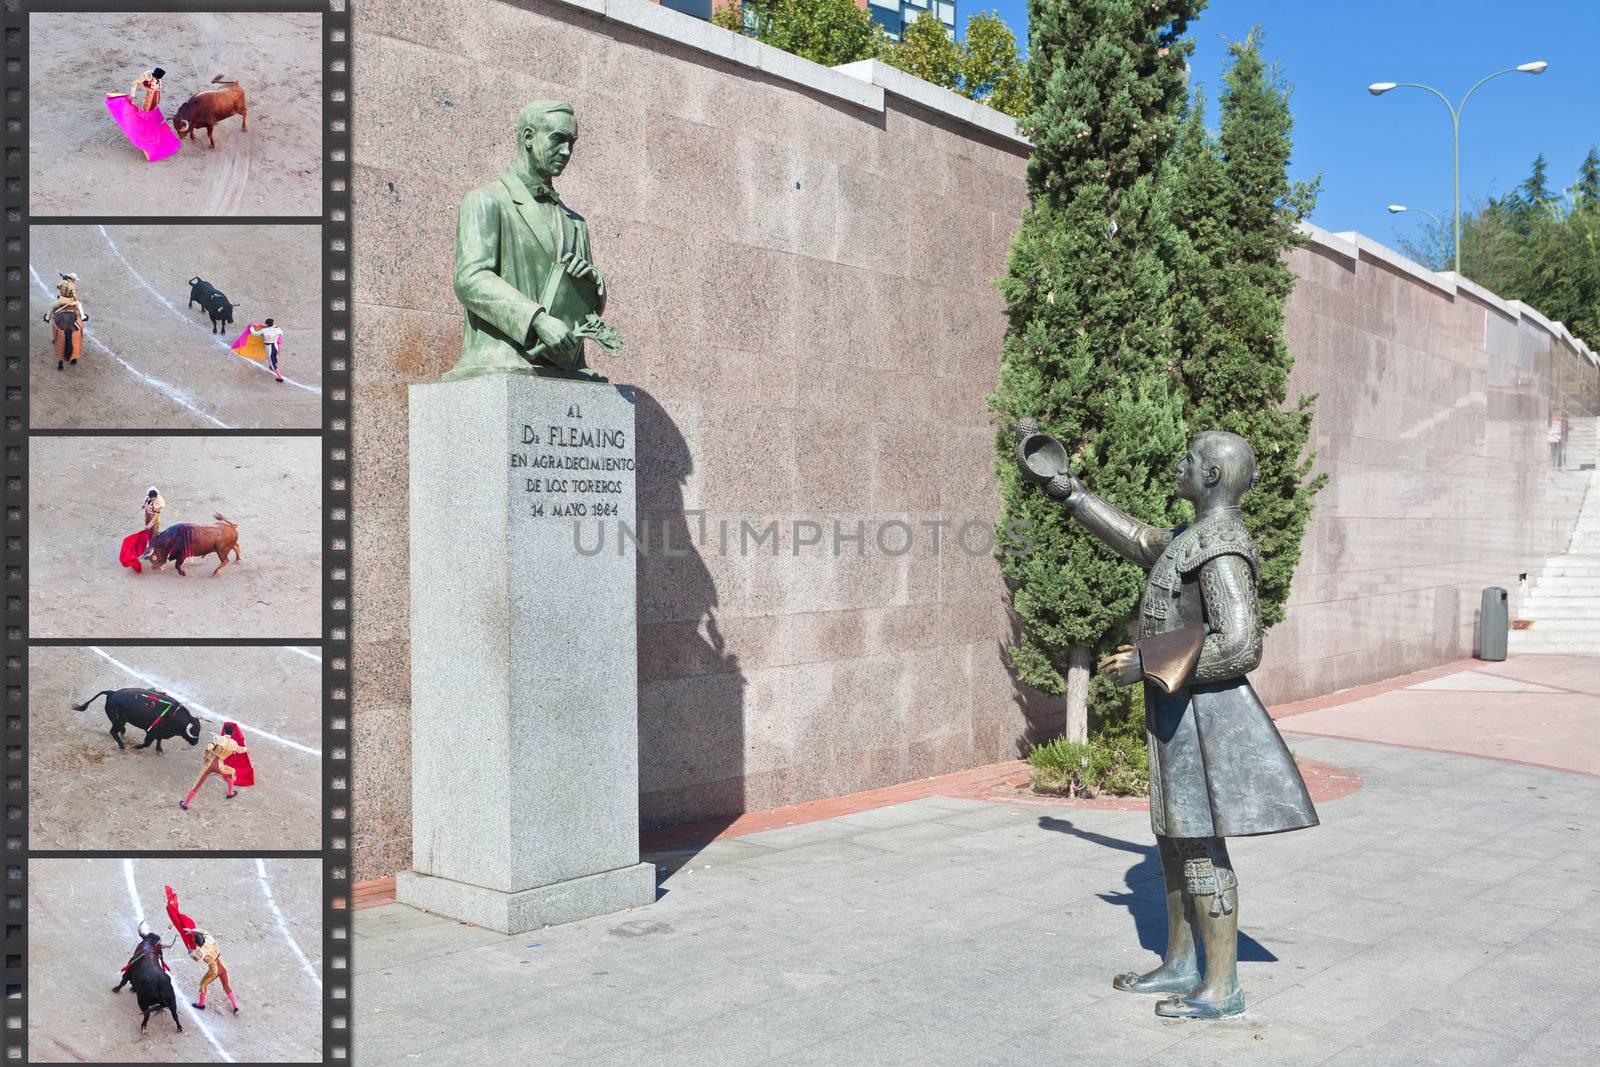 sculpture in front of Bullfighting arena Plaza de Toros i by gary718